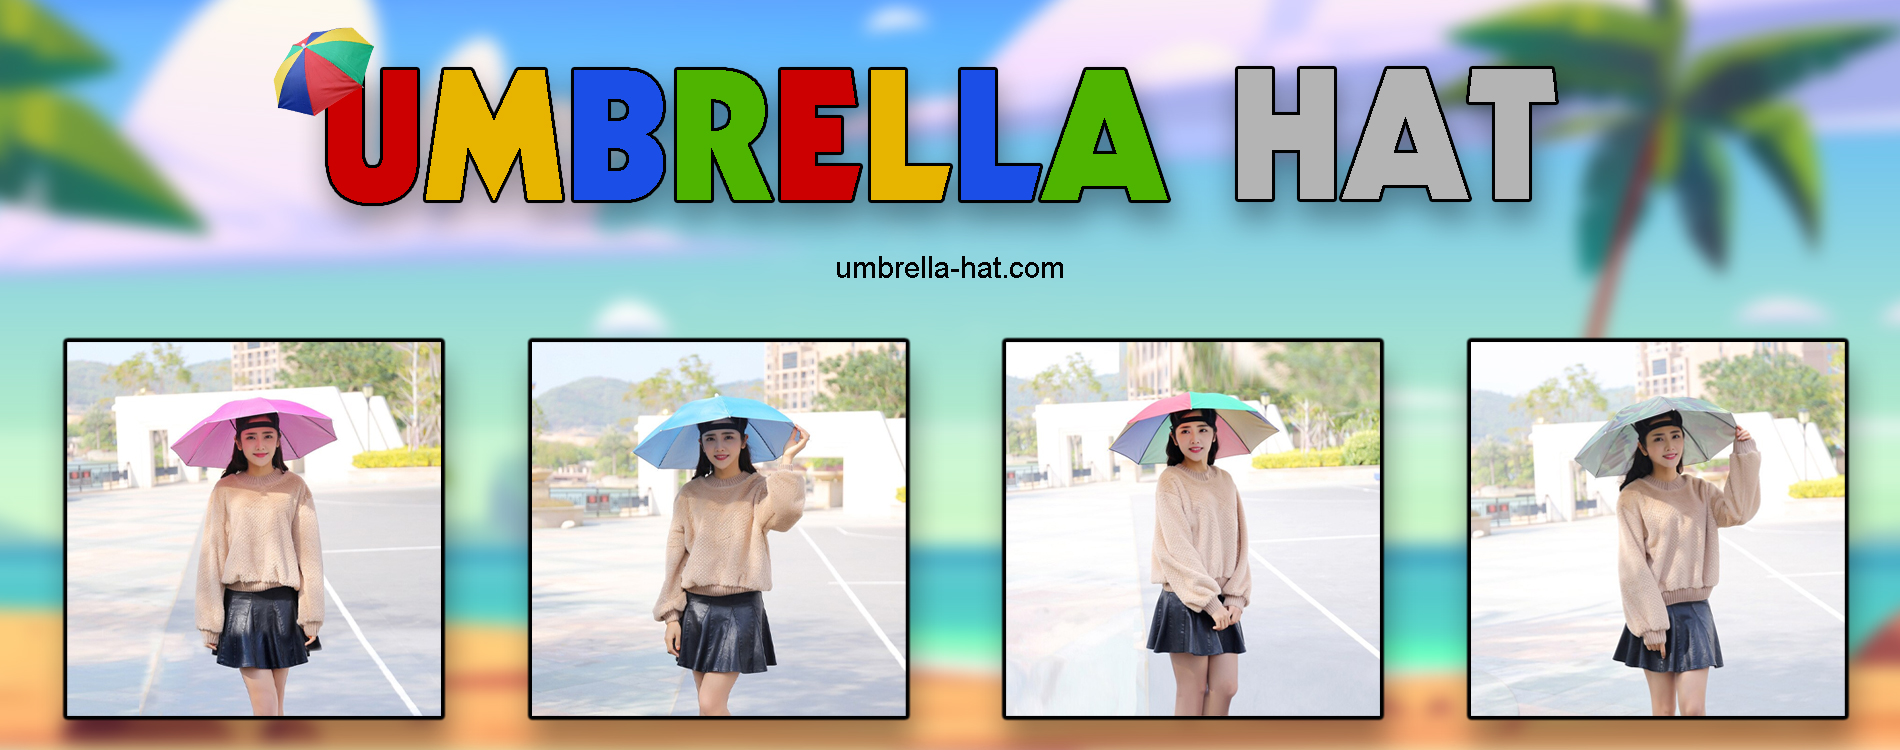 umbrella-hat-banner